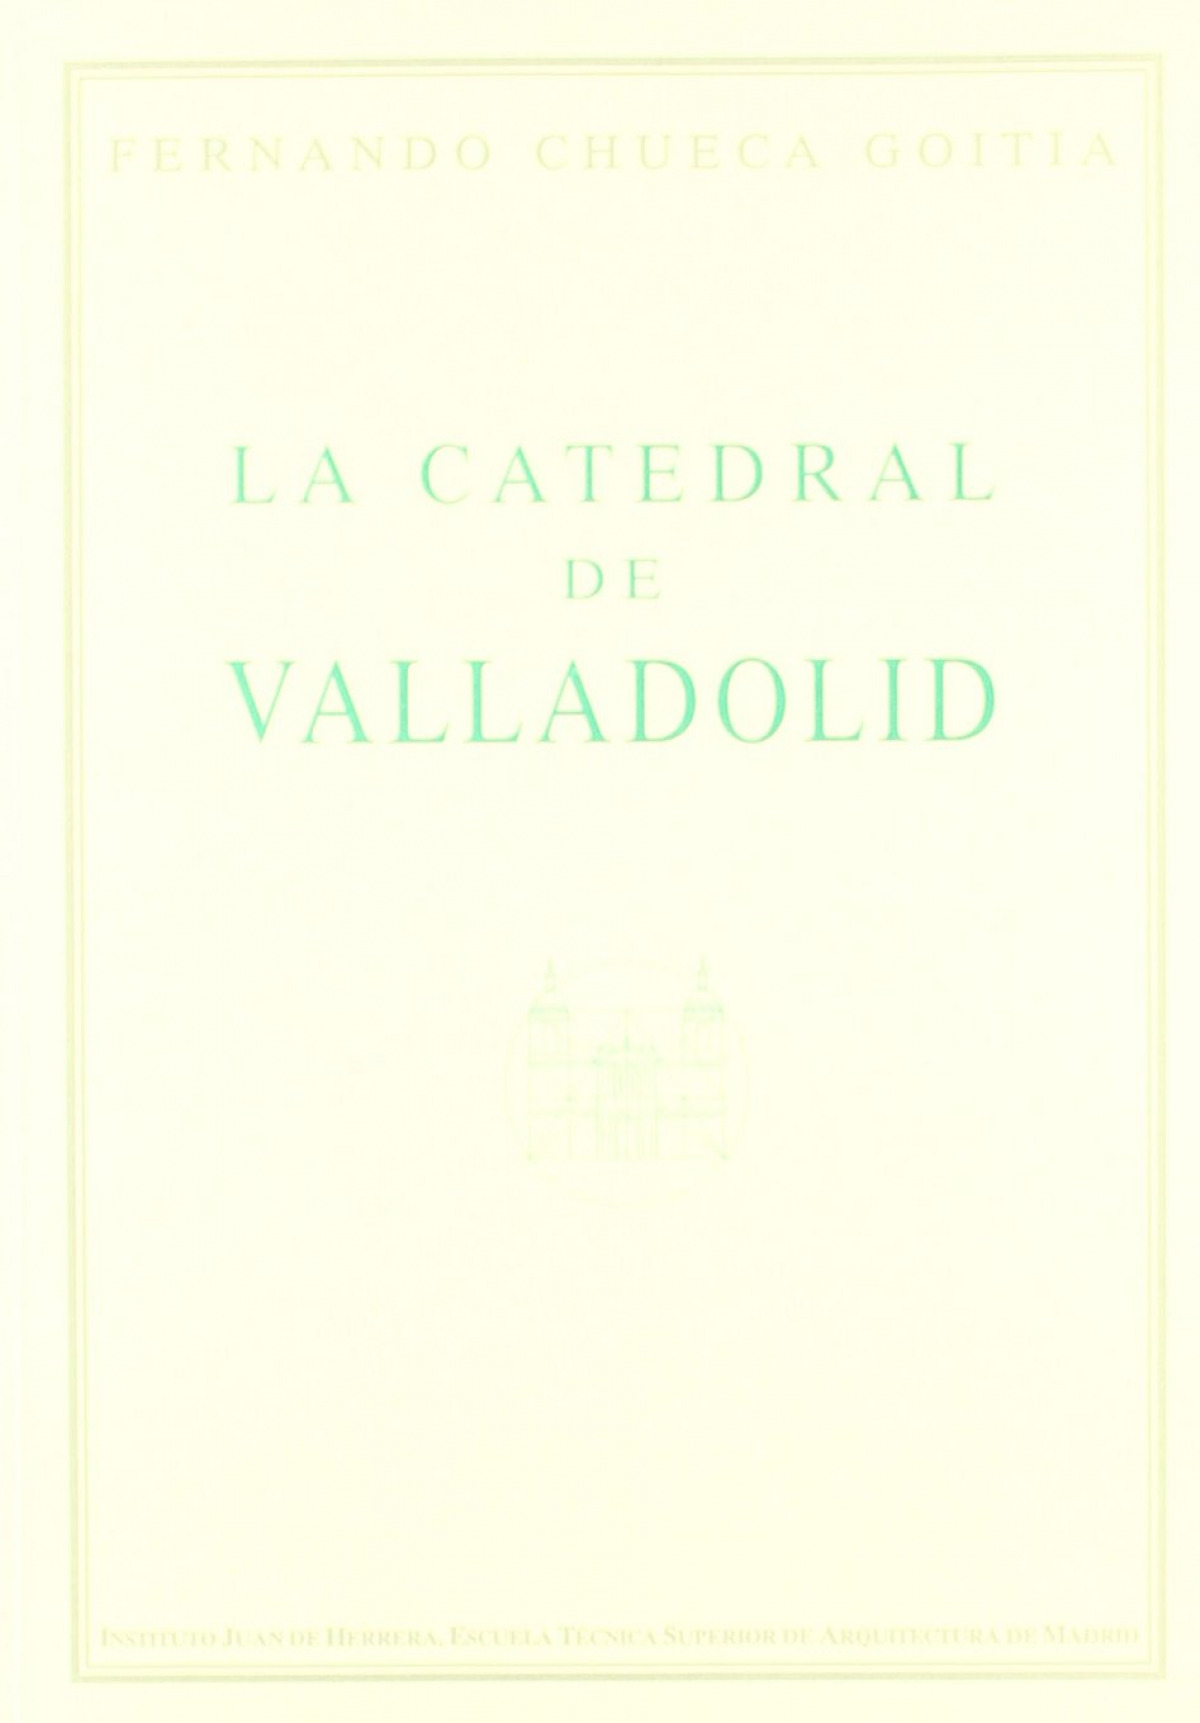 La catedral de Valladolid - Chueca Goitia, Fernando